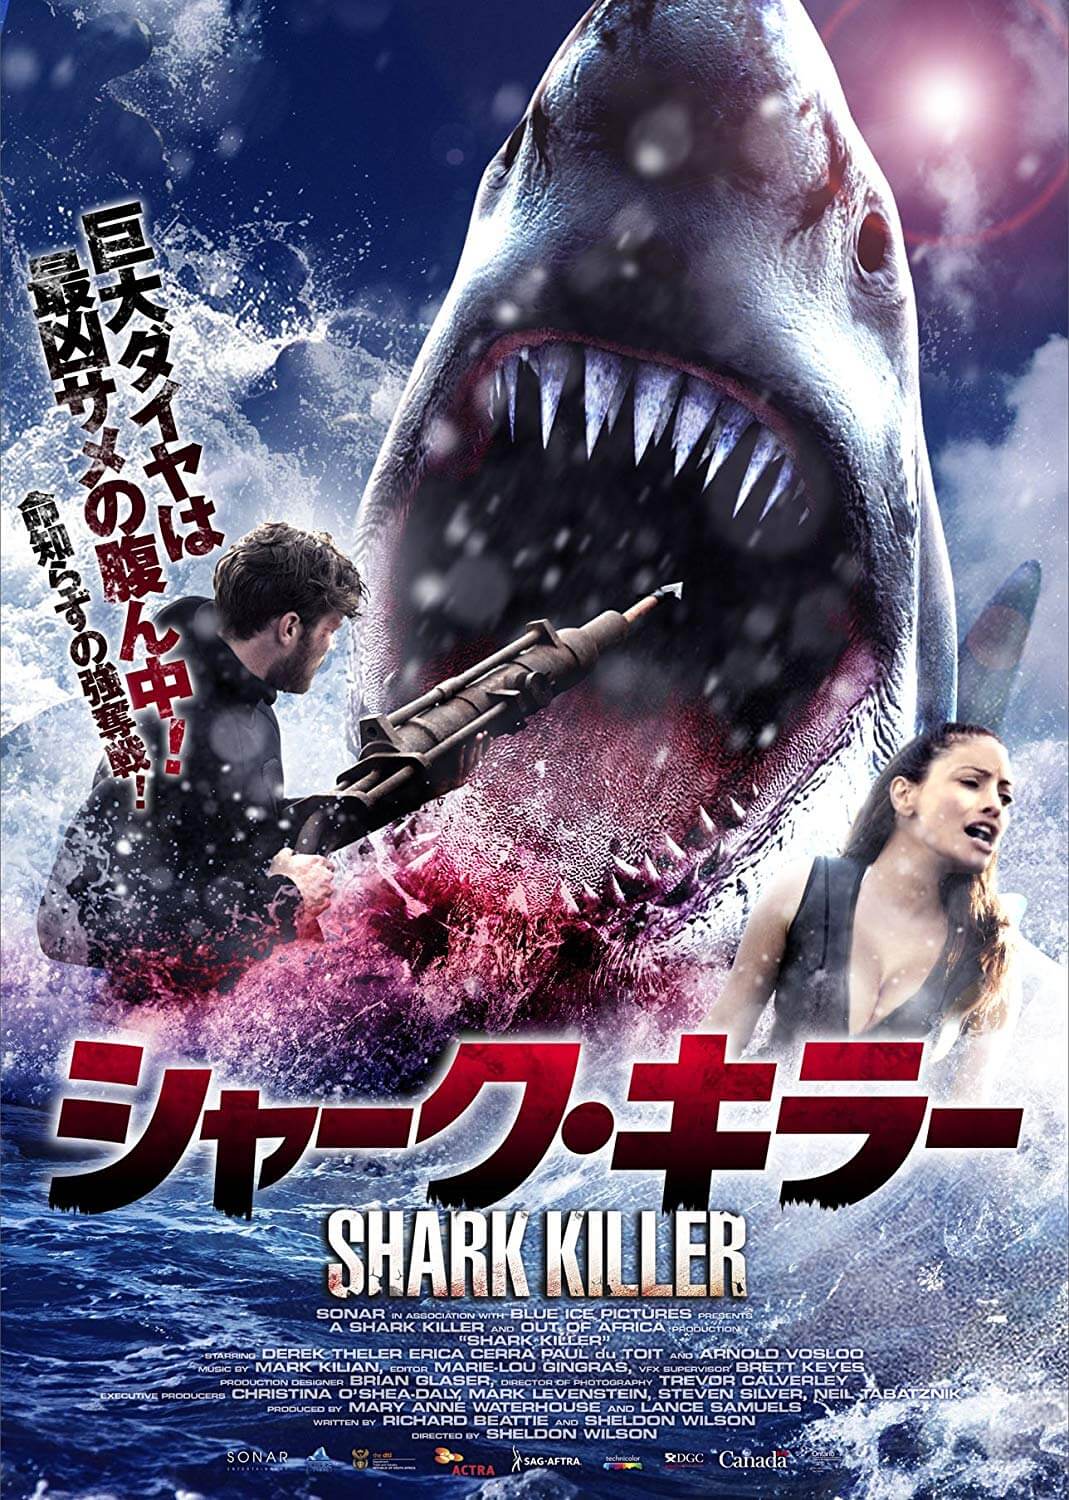 SharkMovie.net | シャークネード ラスト・チェーンソー 4DX